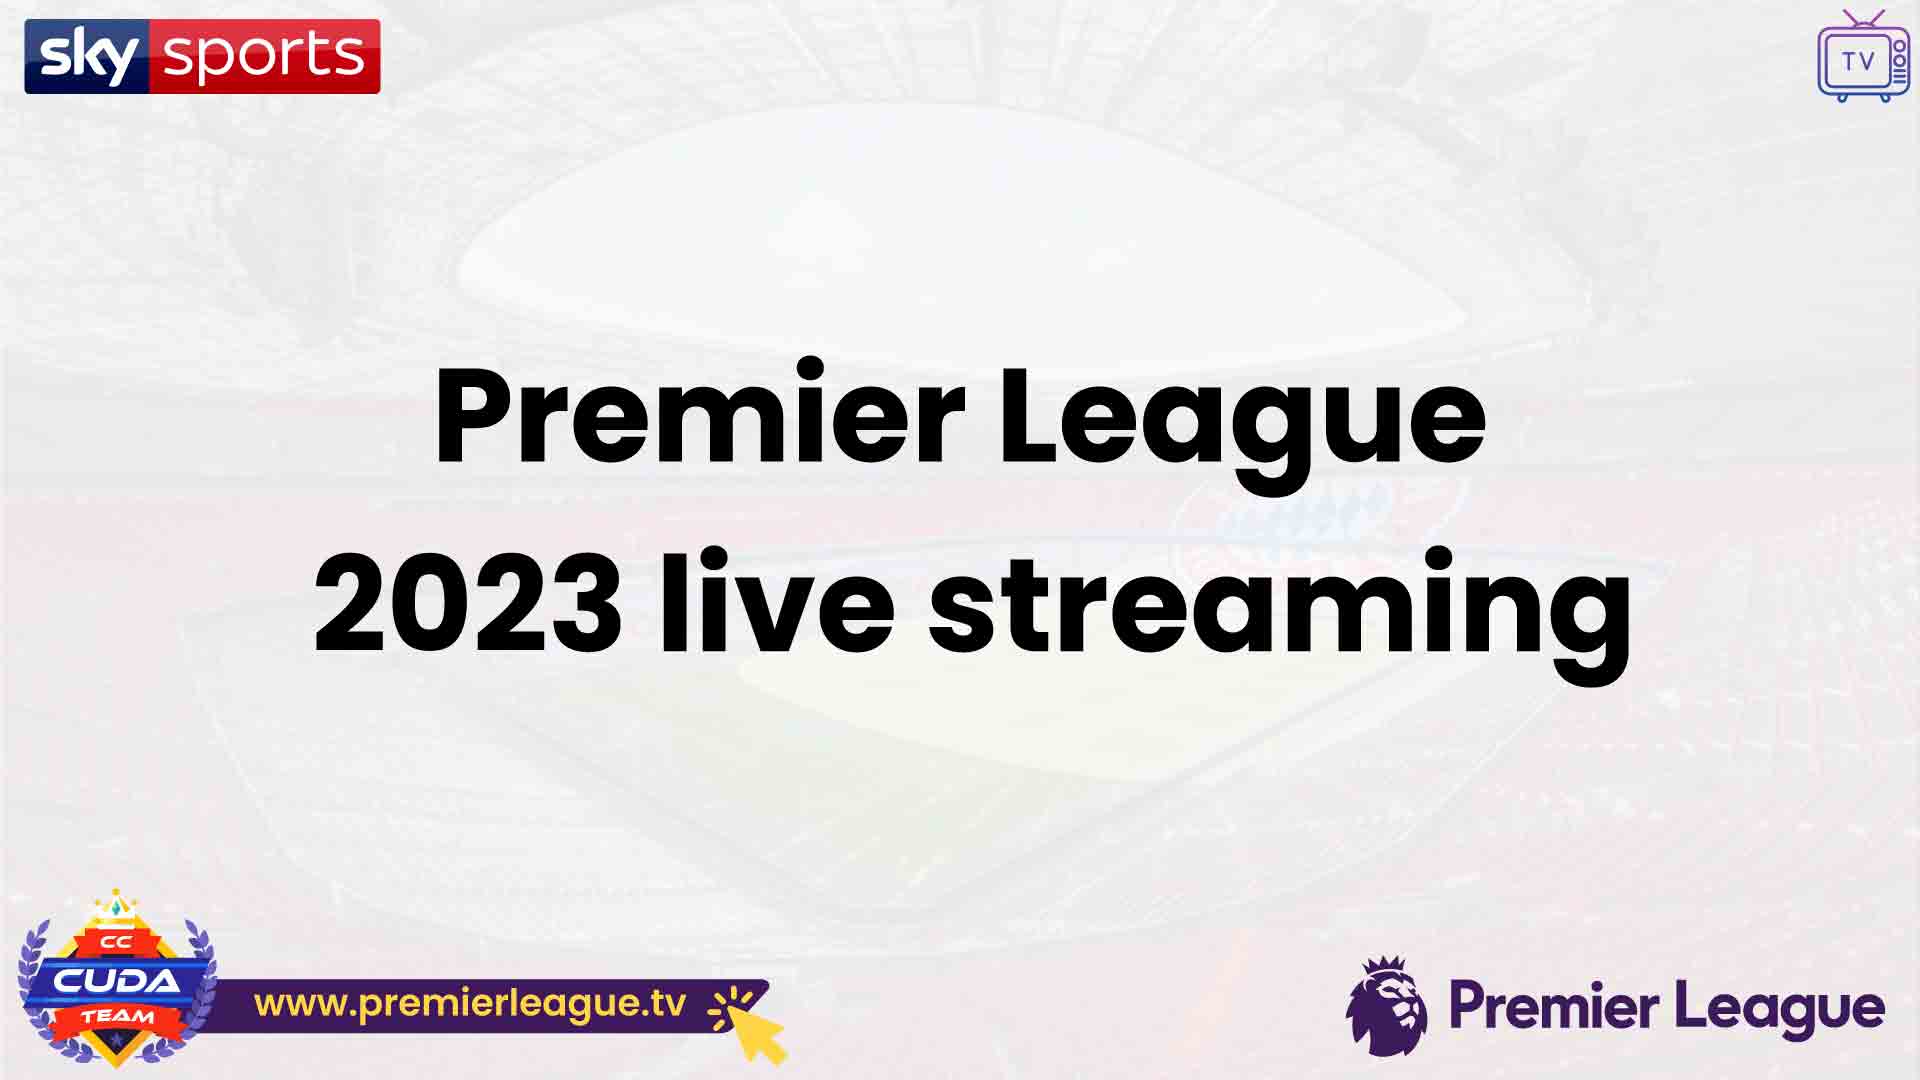 Premier League 2023 live streaming